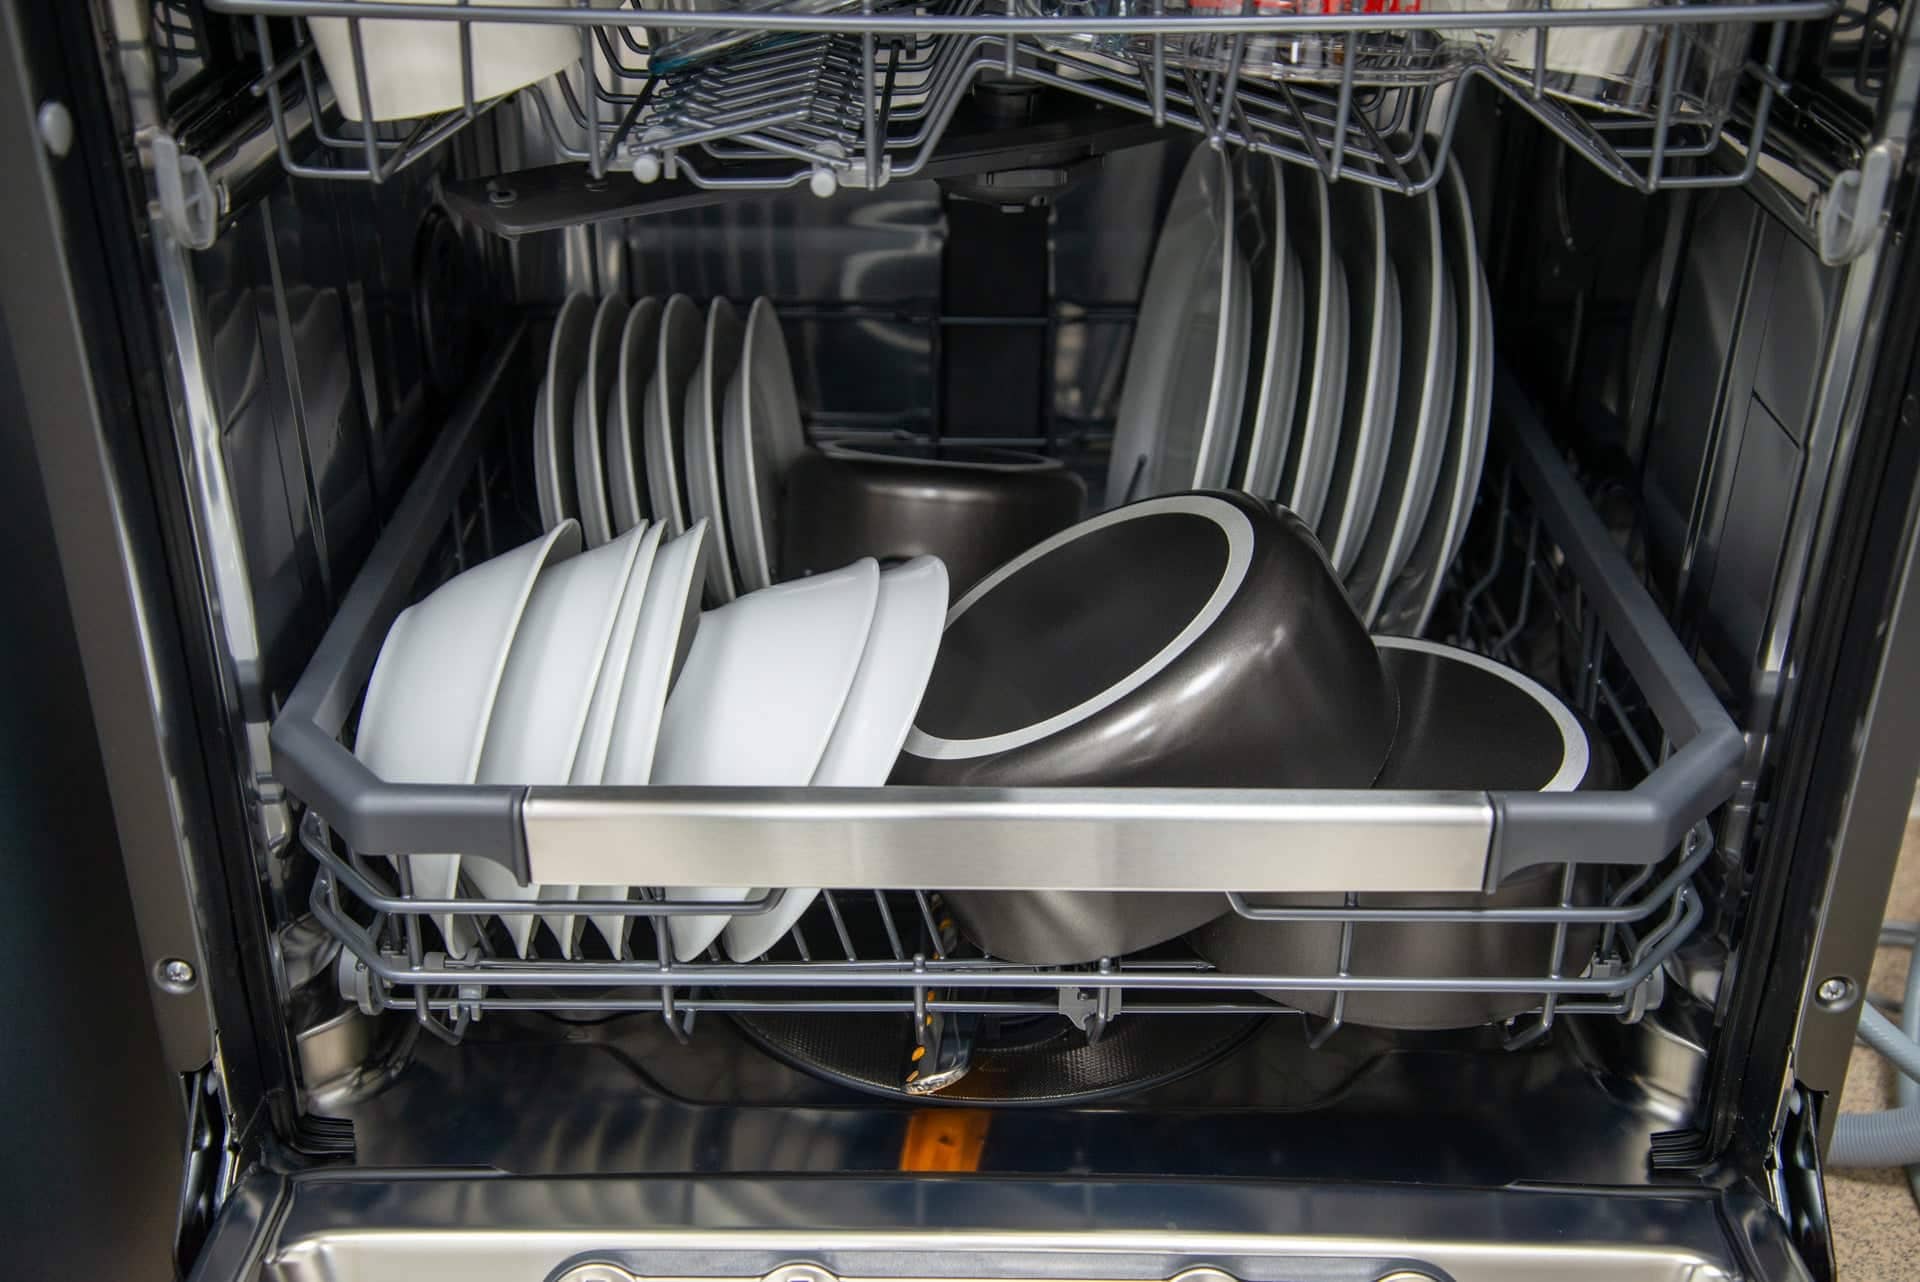 Samsung Dishwasher Heavy Light Blinking: 7 Easy Ways to Fix